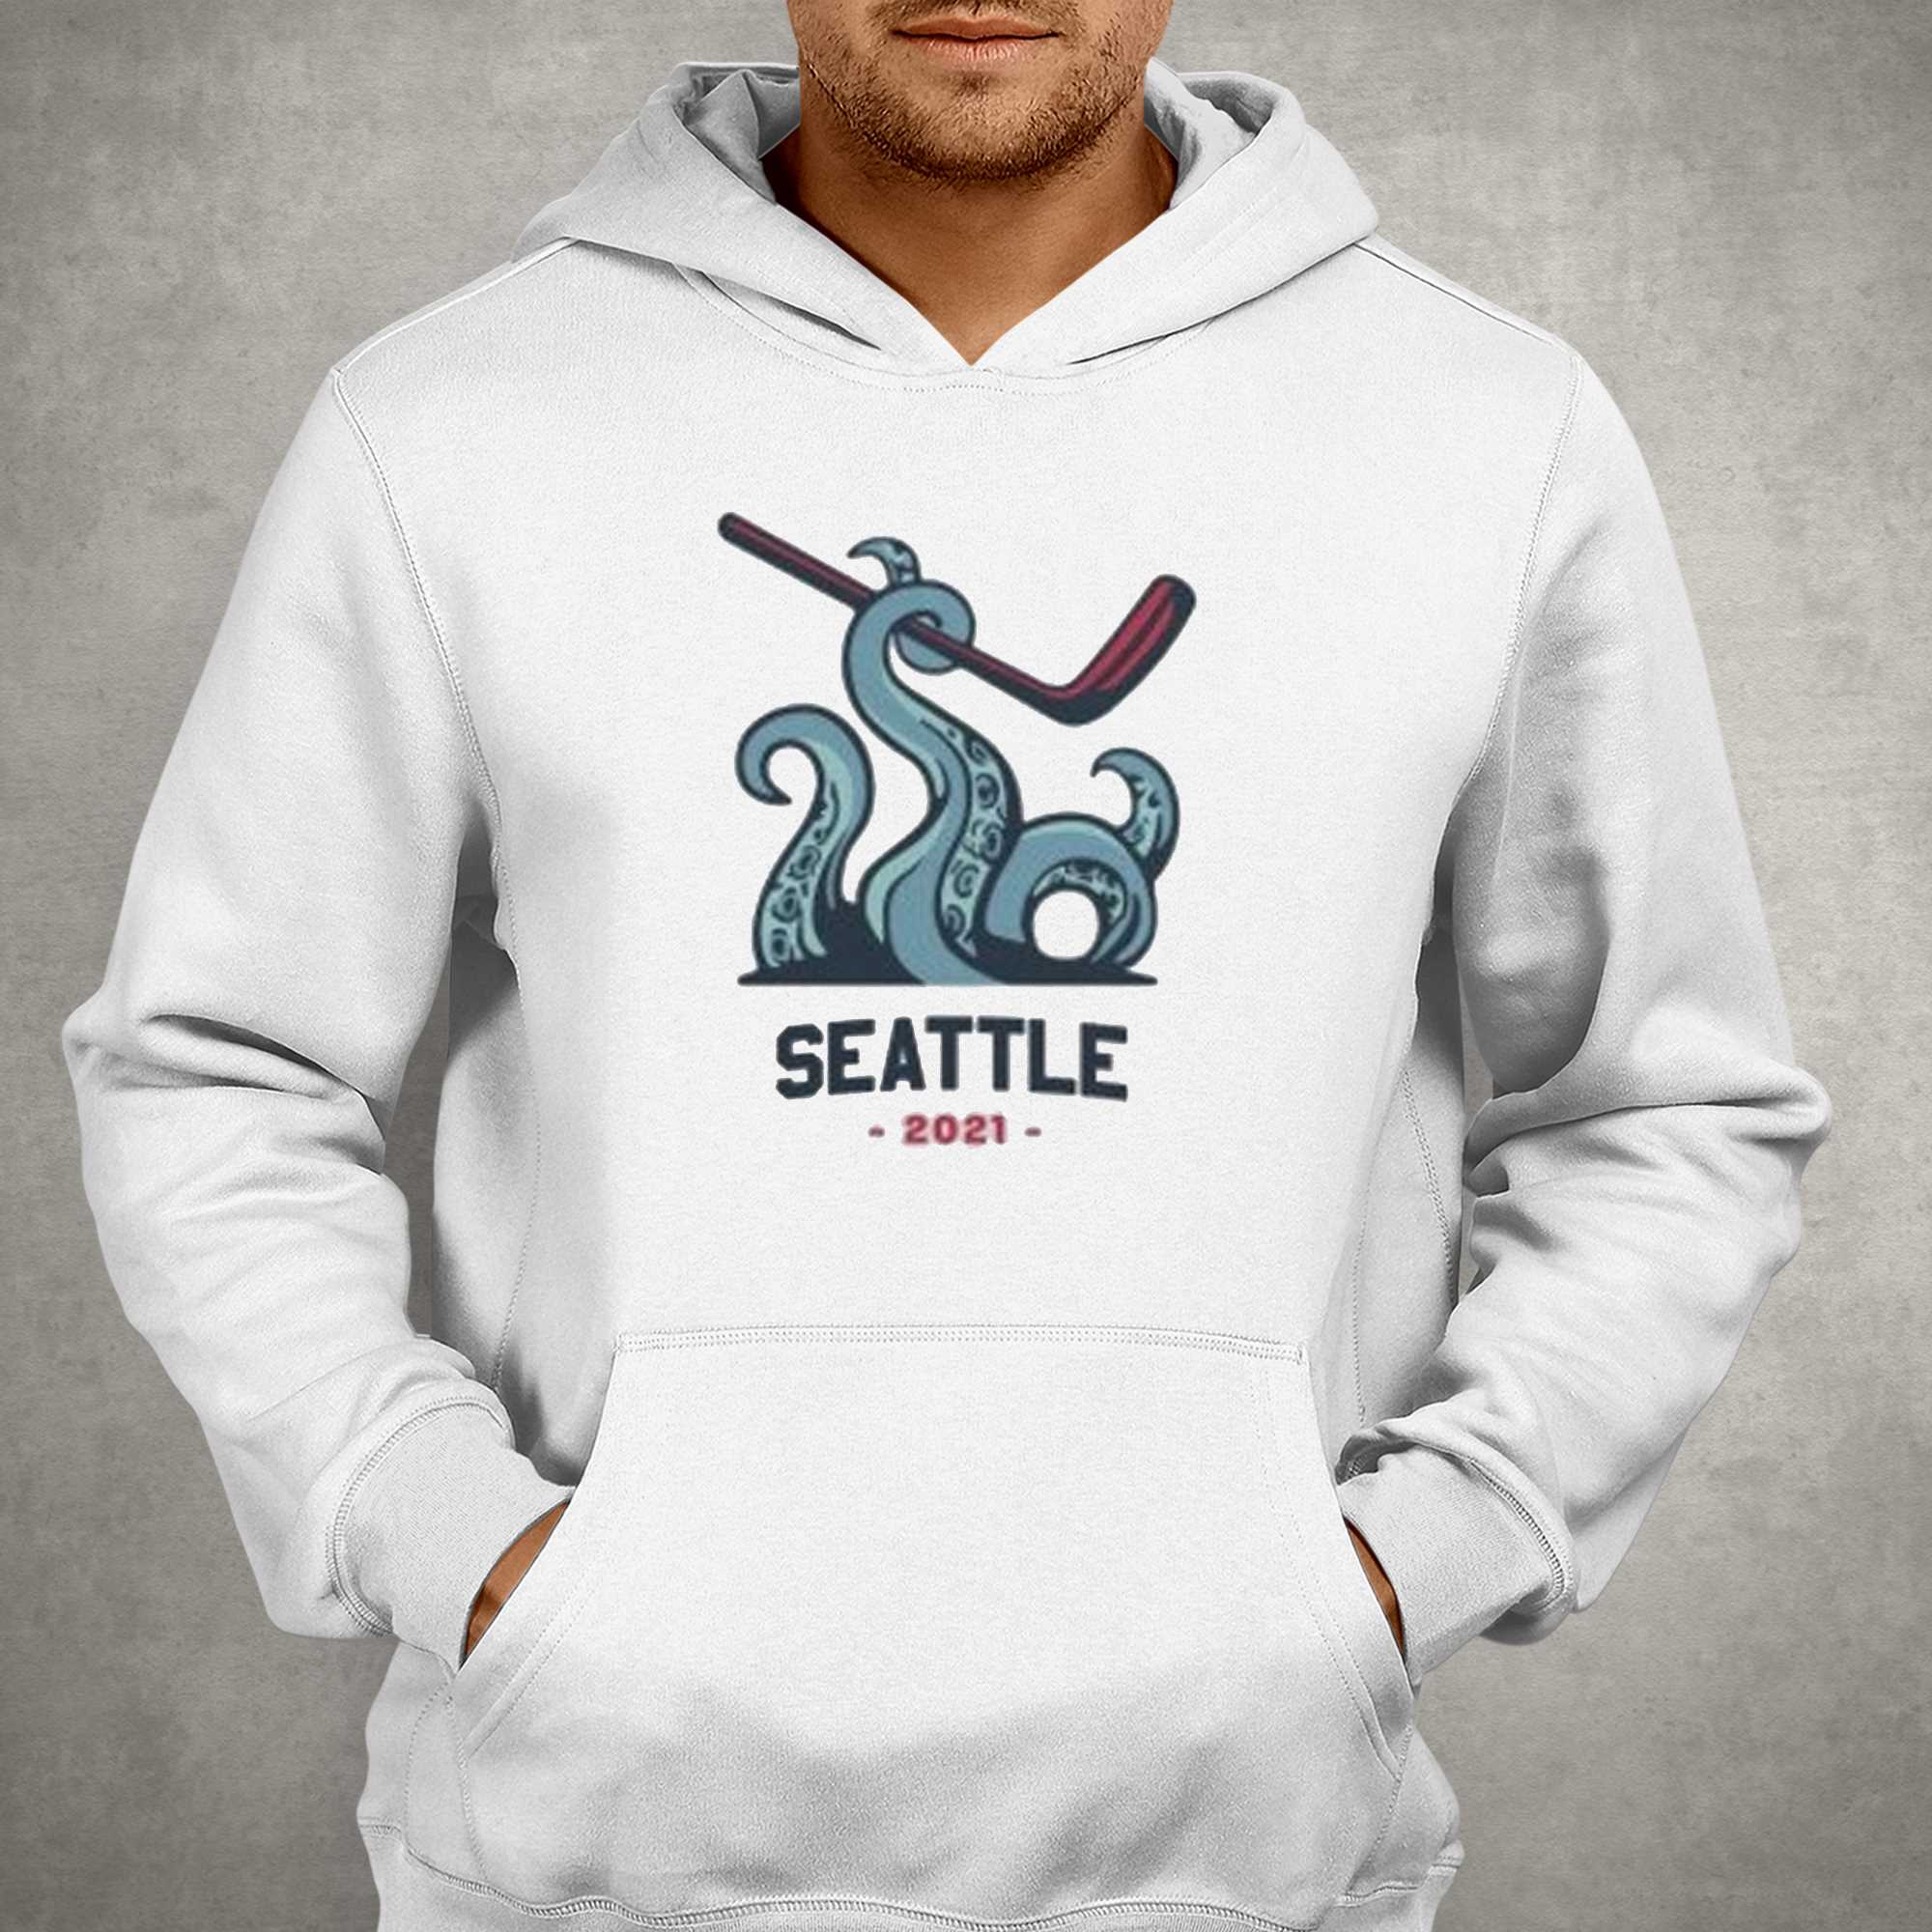 Seattle Kraken Hockey Club 2023 Shirt - Shibtee Clothing